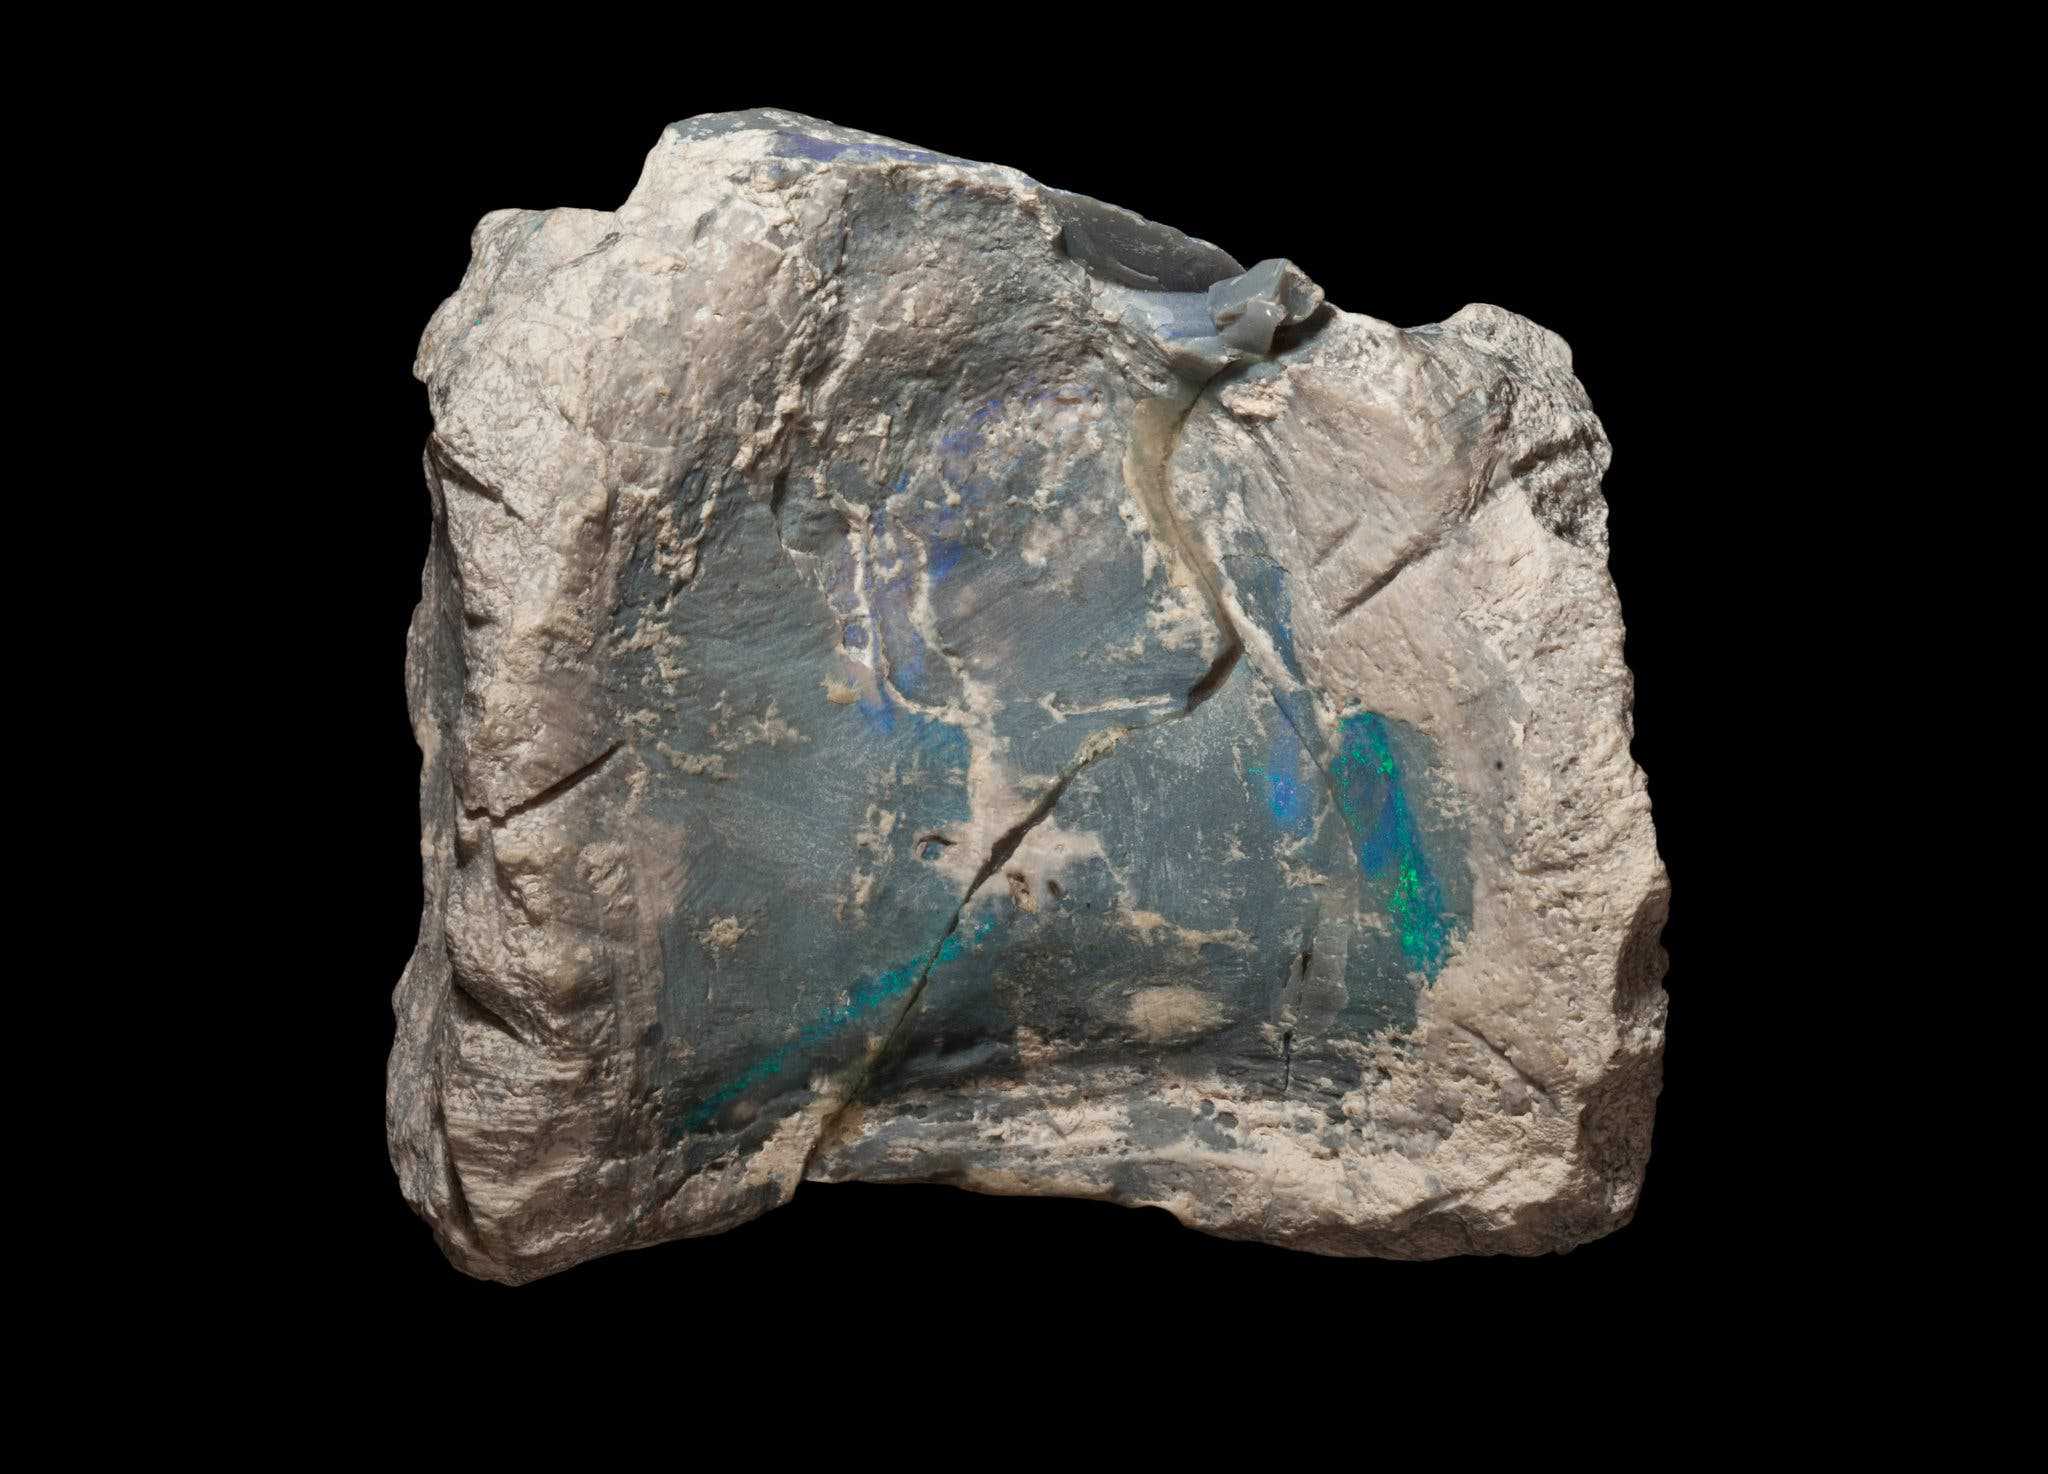 One of the back bones of Fostoria found in gemstones.Credit: Robert A. Smith, Australian Opal Center.